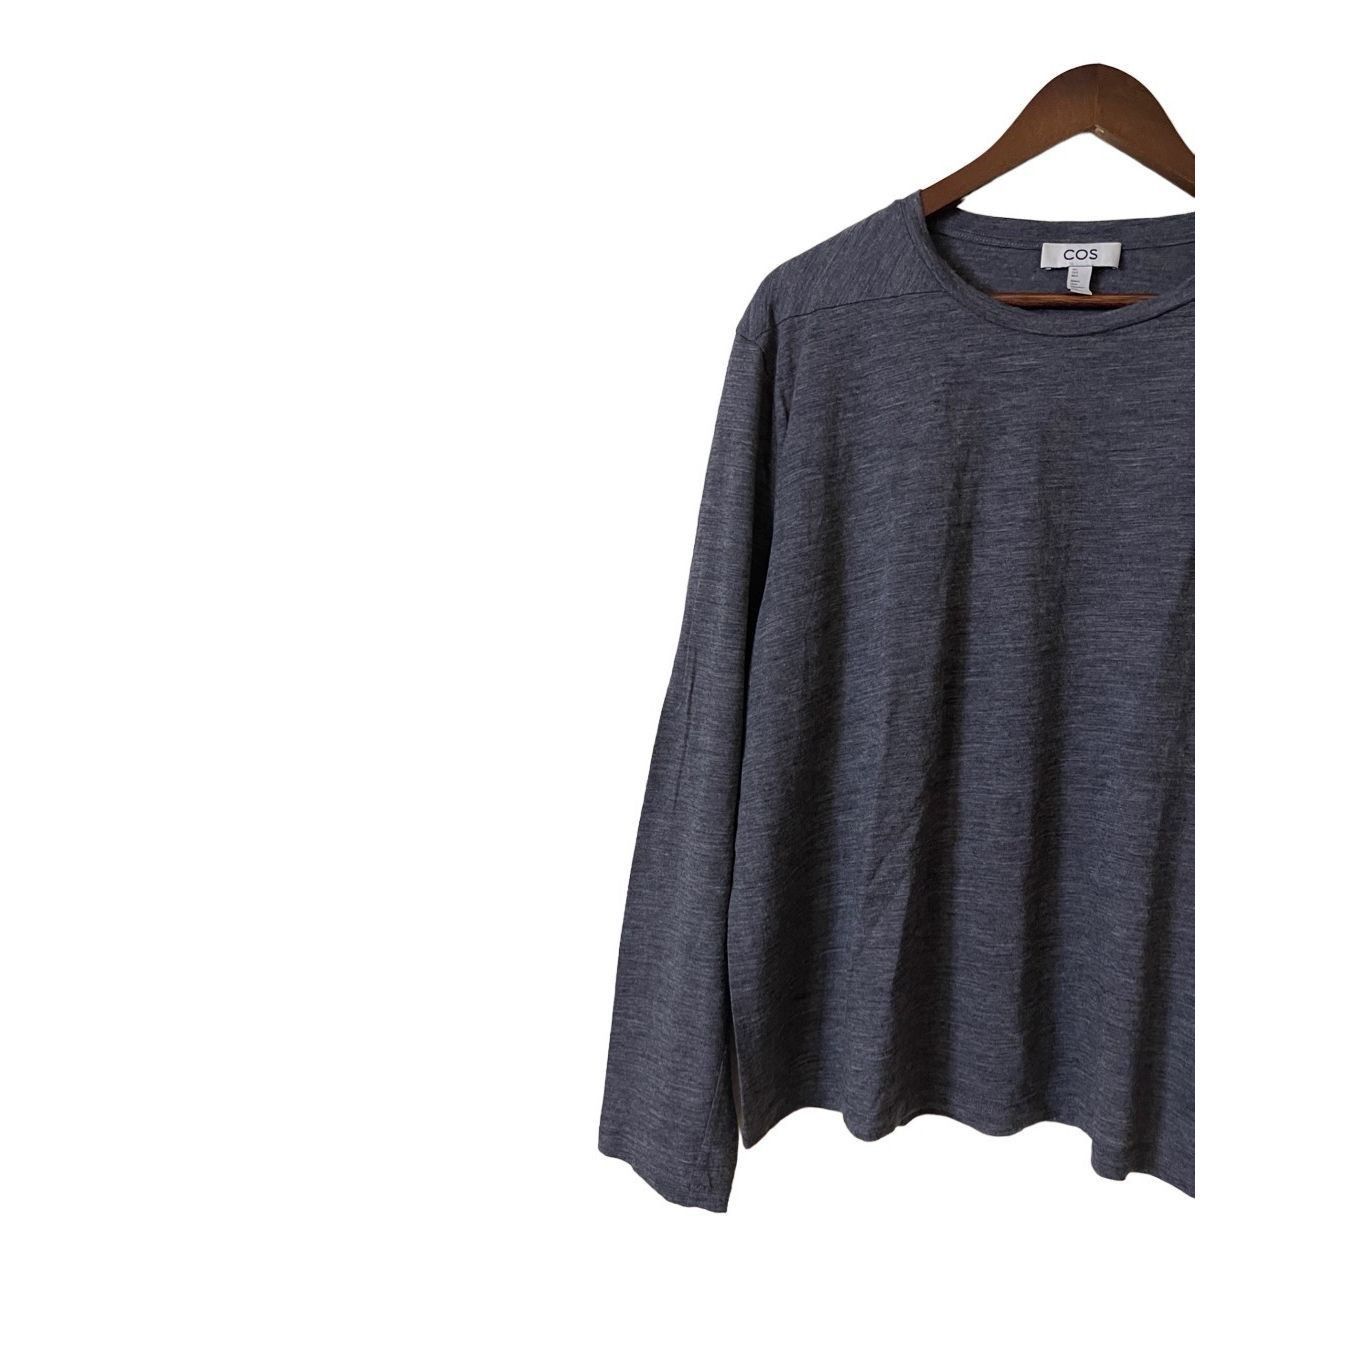 Cos COS 100% Wool Grey Crewneck Long Sleeve Lightweight Sweater Size US L / EU 52-54 / 3 - 4 Thumbnail